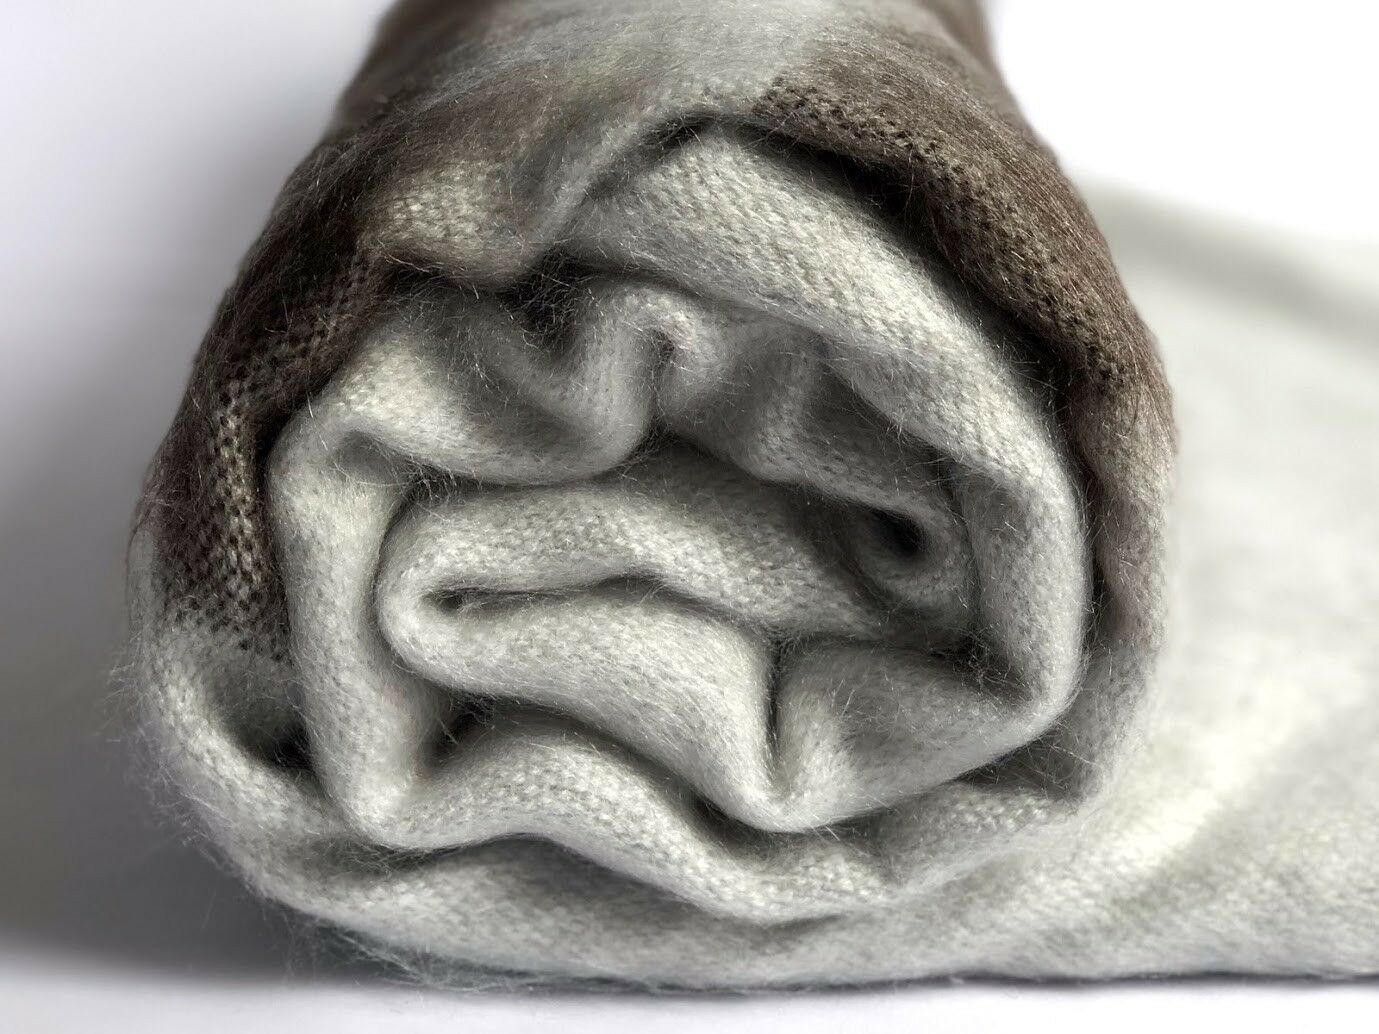 Tungurahua - Baby Alpaca Wool Throw Blanket / Sofa Cover - Queen 90" x 65" - white cross stripes pattern